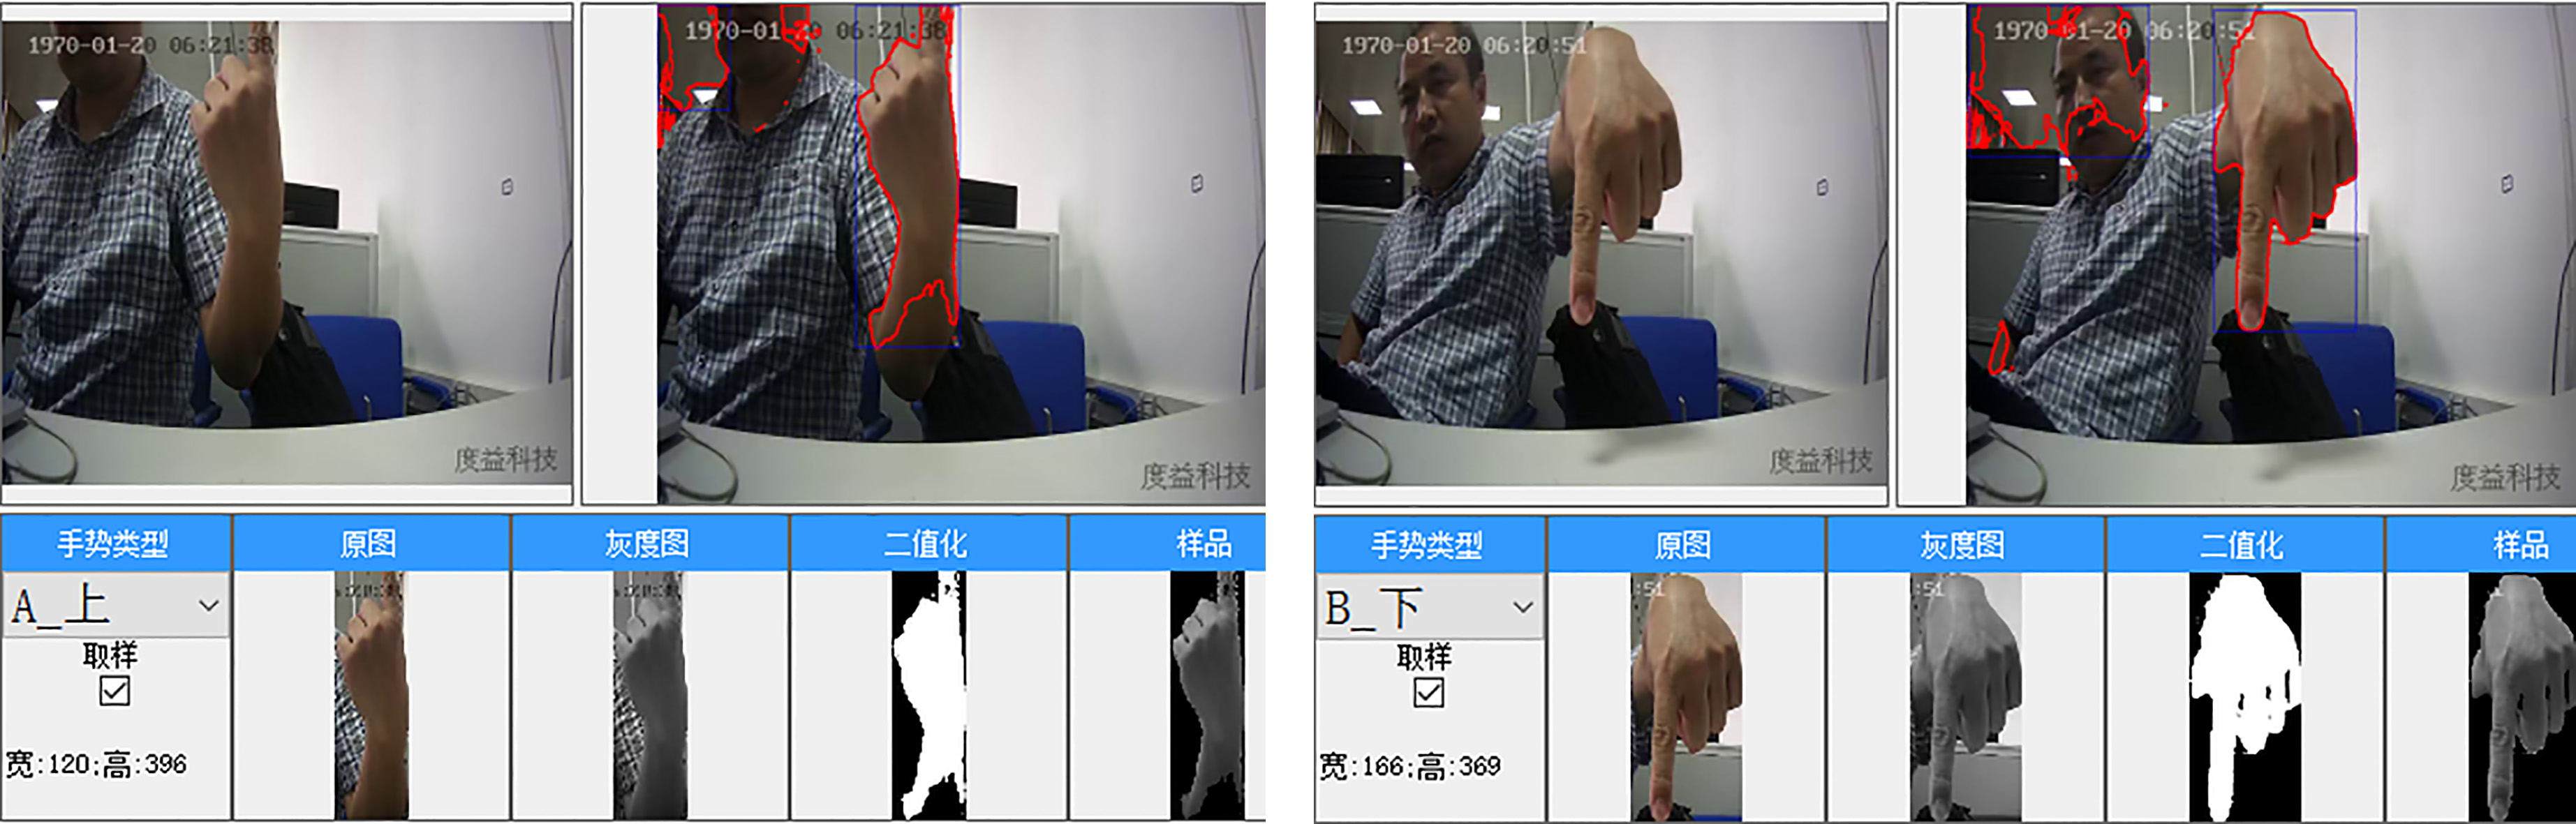 Hand detection using skin-color algorithm.